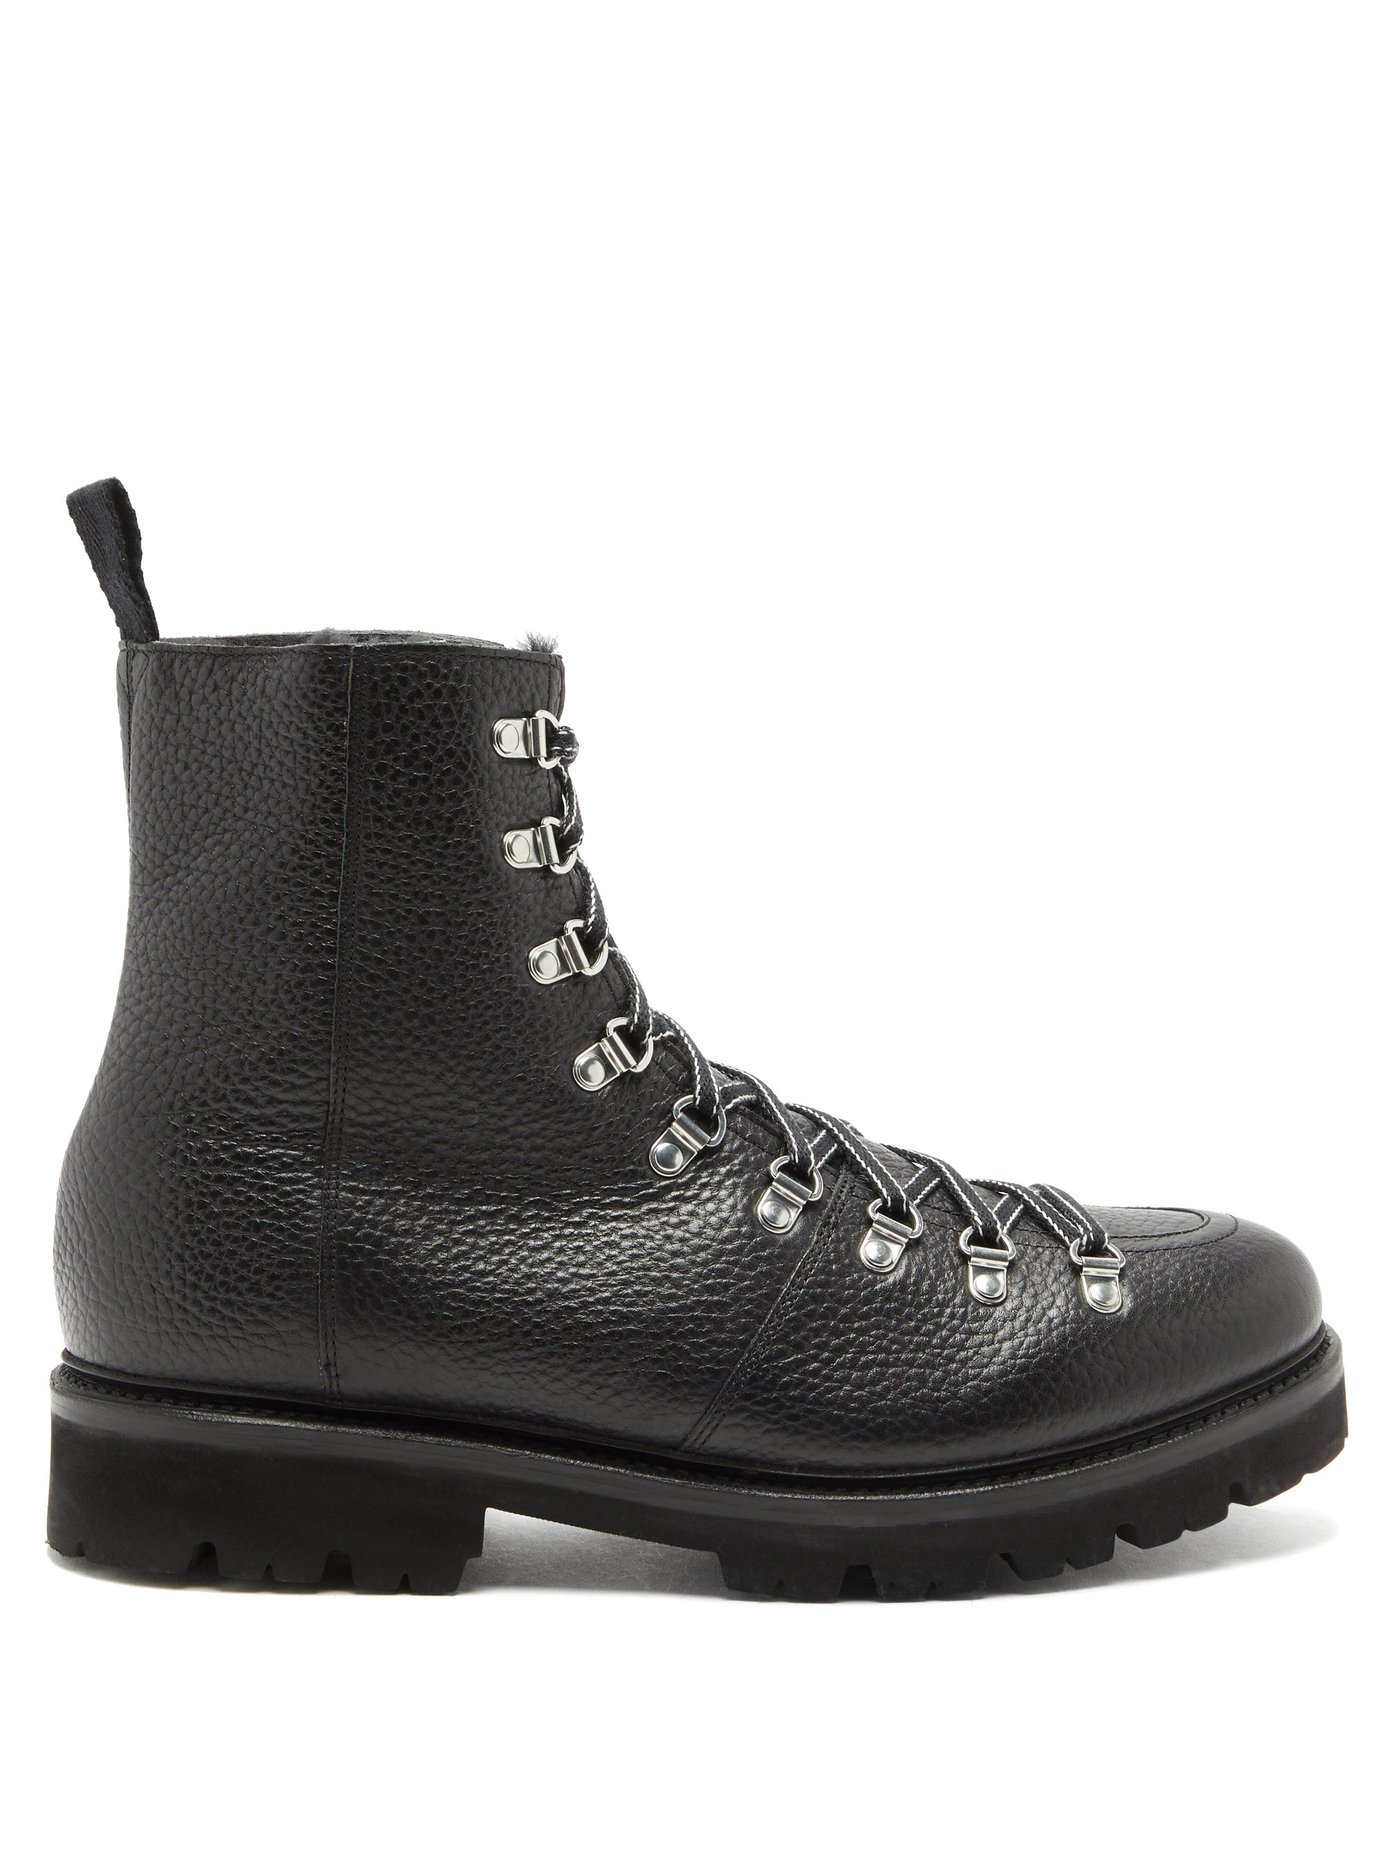 Brady pebble-grain leather boots 